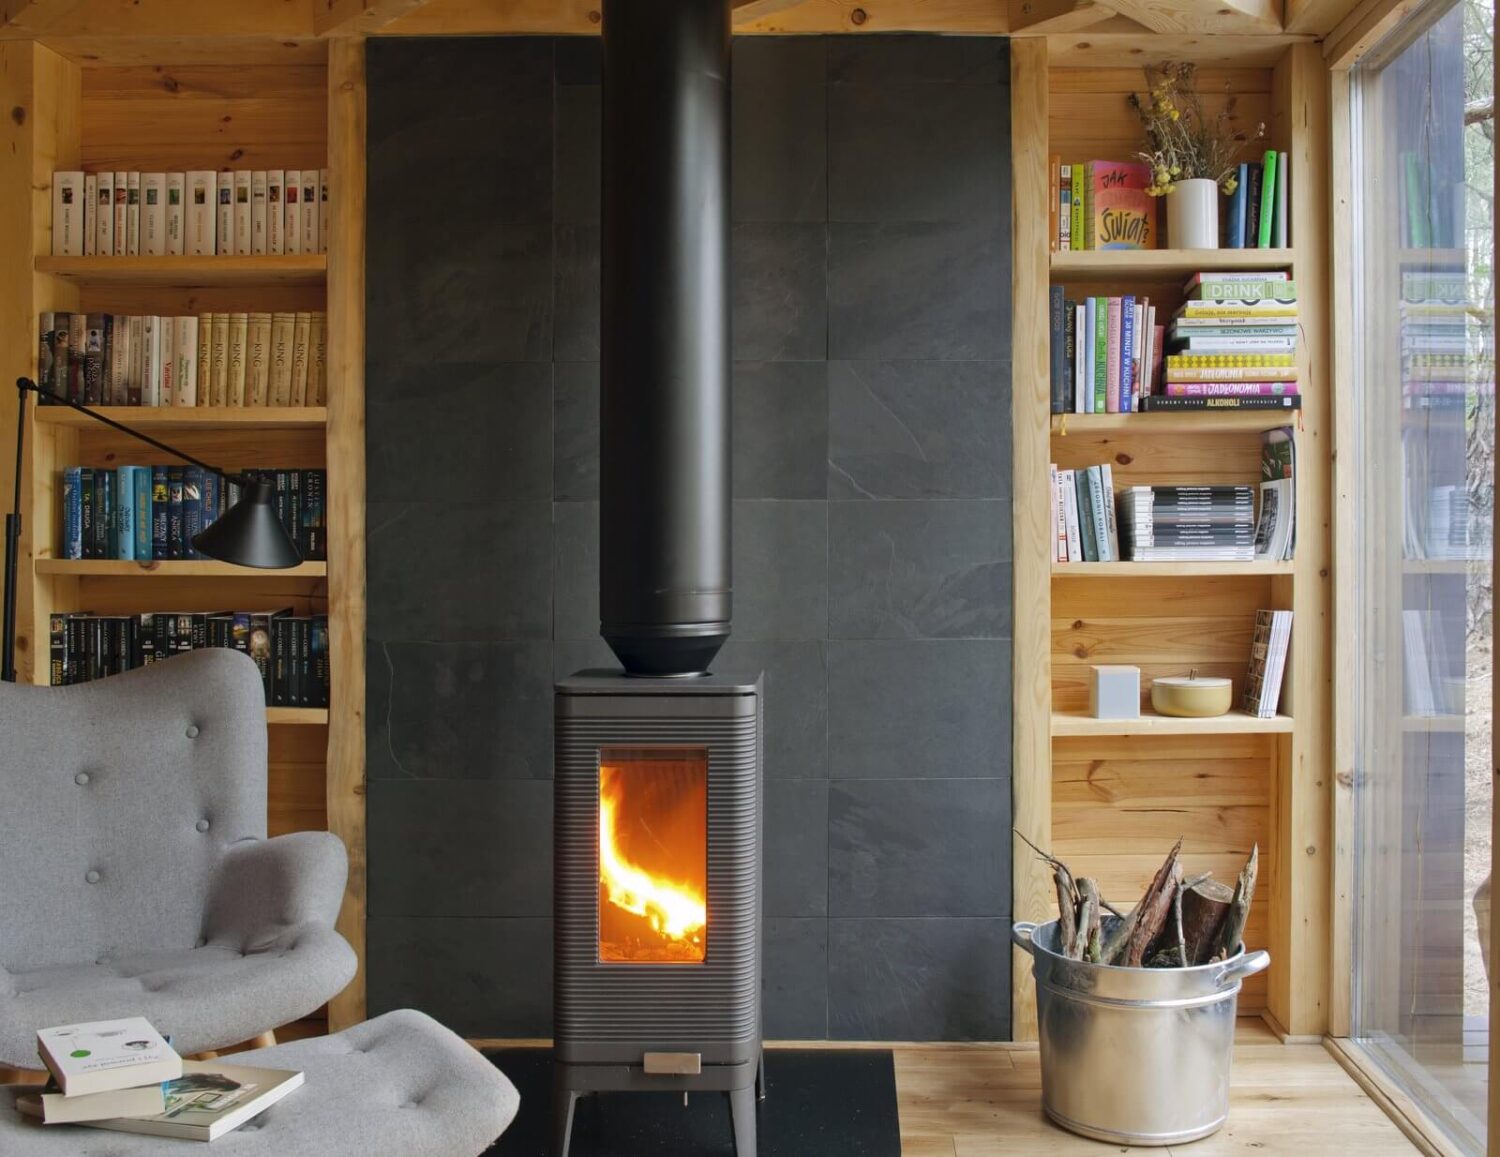 iwaki-cast-iron-wood-stove-by-invicta-cabin-poland-nordroom